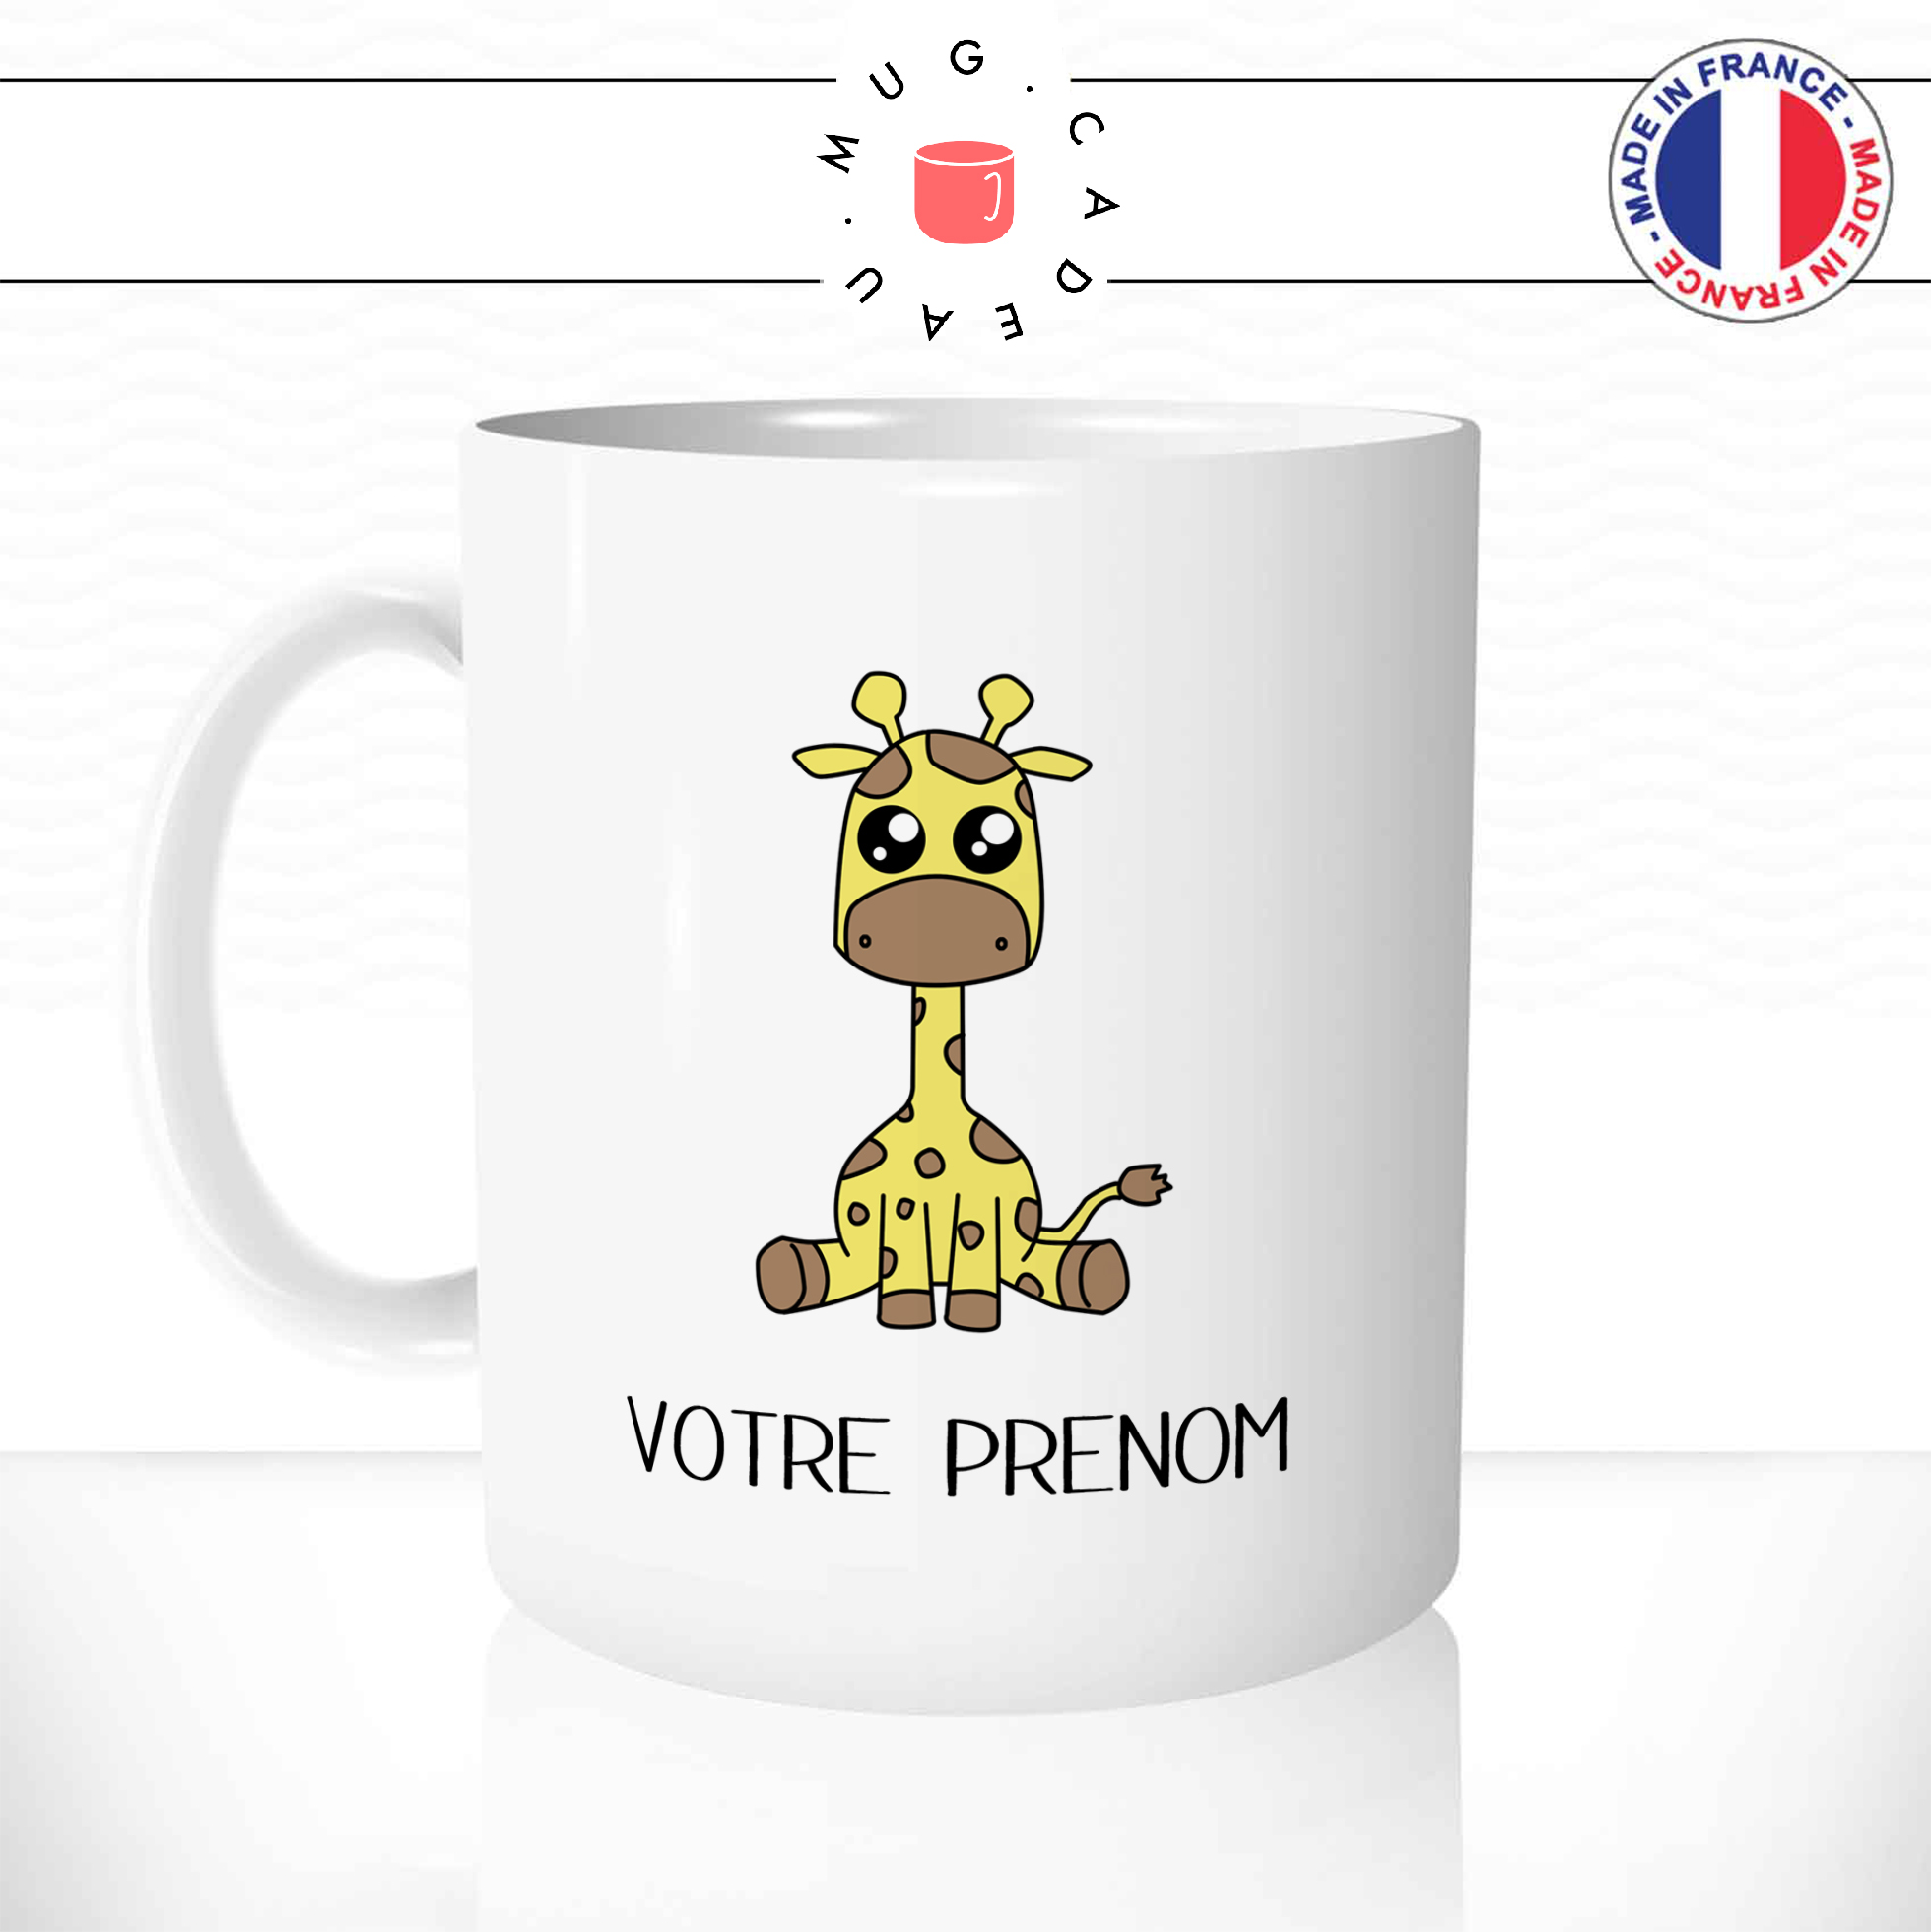 mug-tasse-ref4-girafe-kawaii-dessin-couleur-enfant-prenom-personnalisabe-cafe-the-mugs-tasses-personnalise-anse-gauche